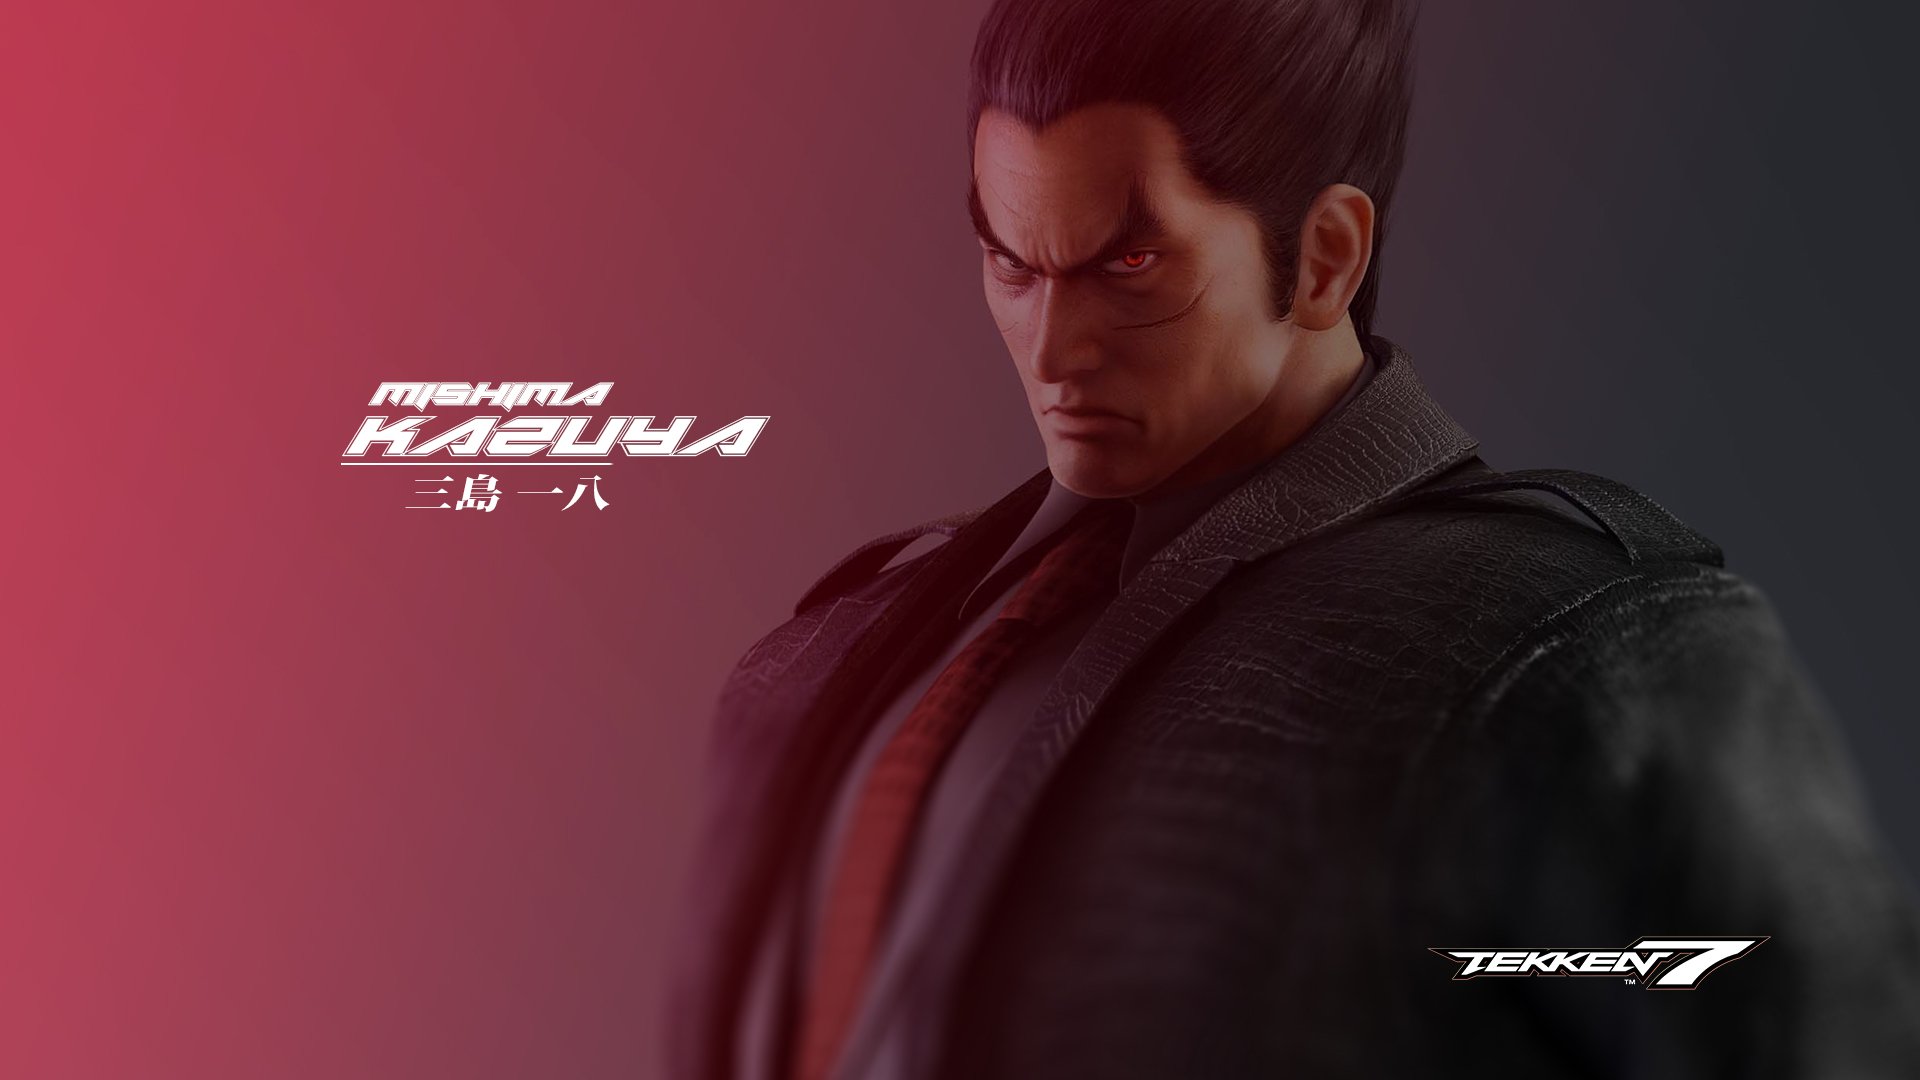 TekkenMods - Tekken 8 - Kazuya Mishima